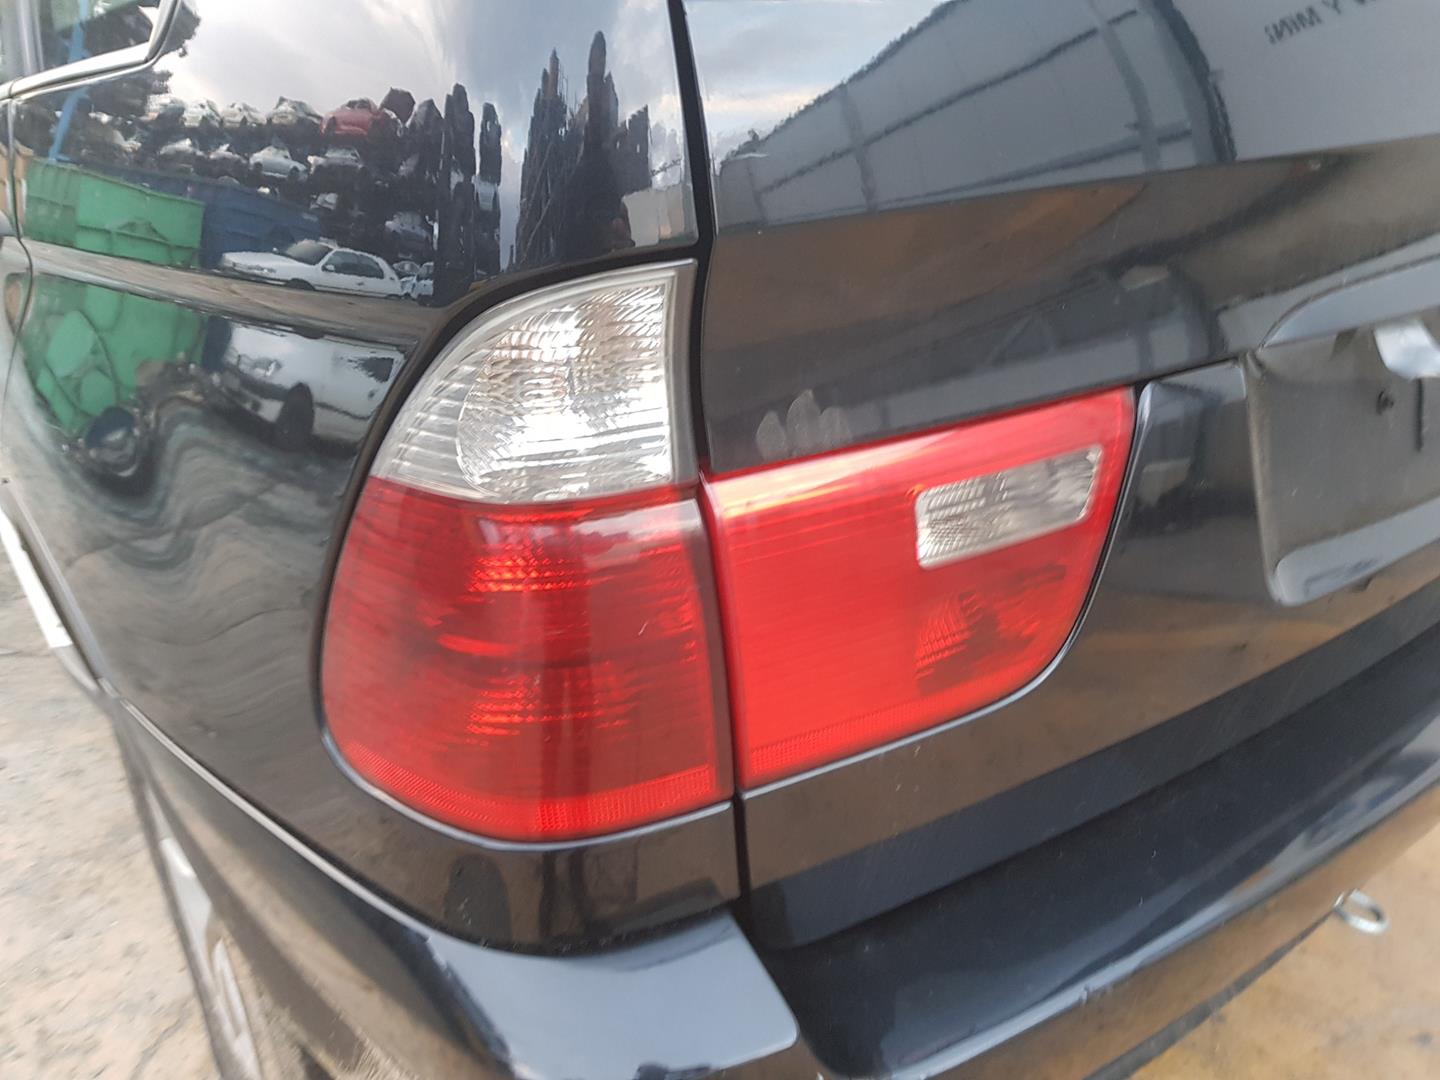 BMW X5 E53 (1999-2006) Переключатель света 8372204, 61318372204 19775455